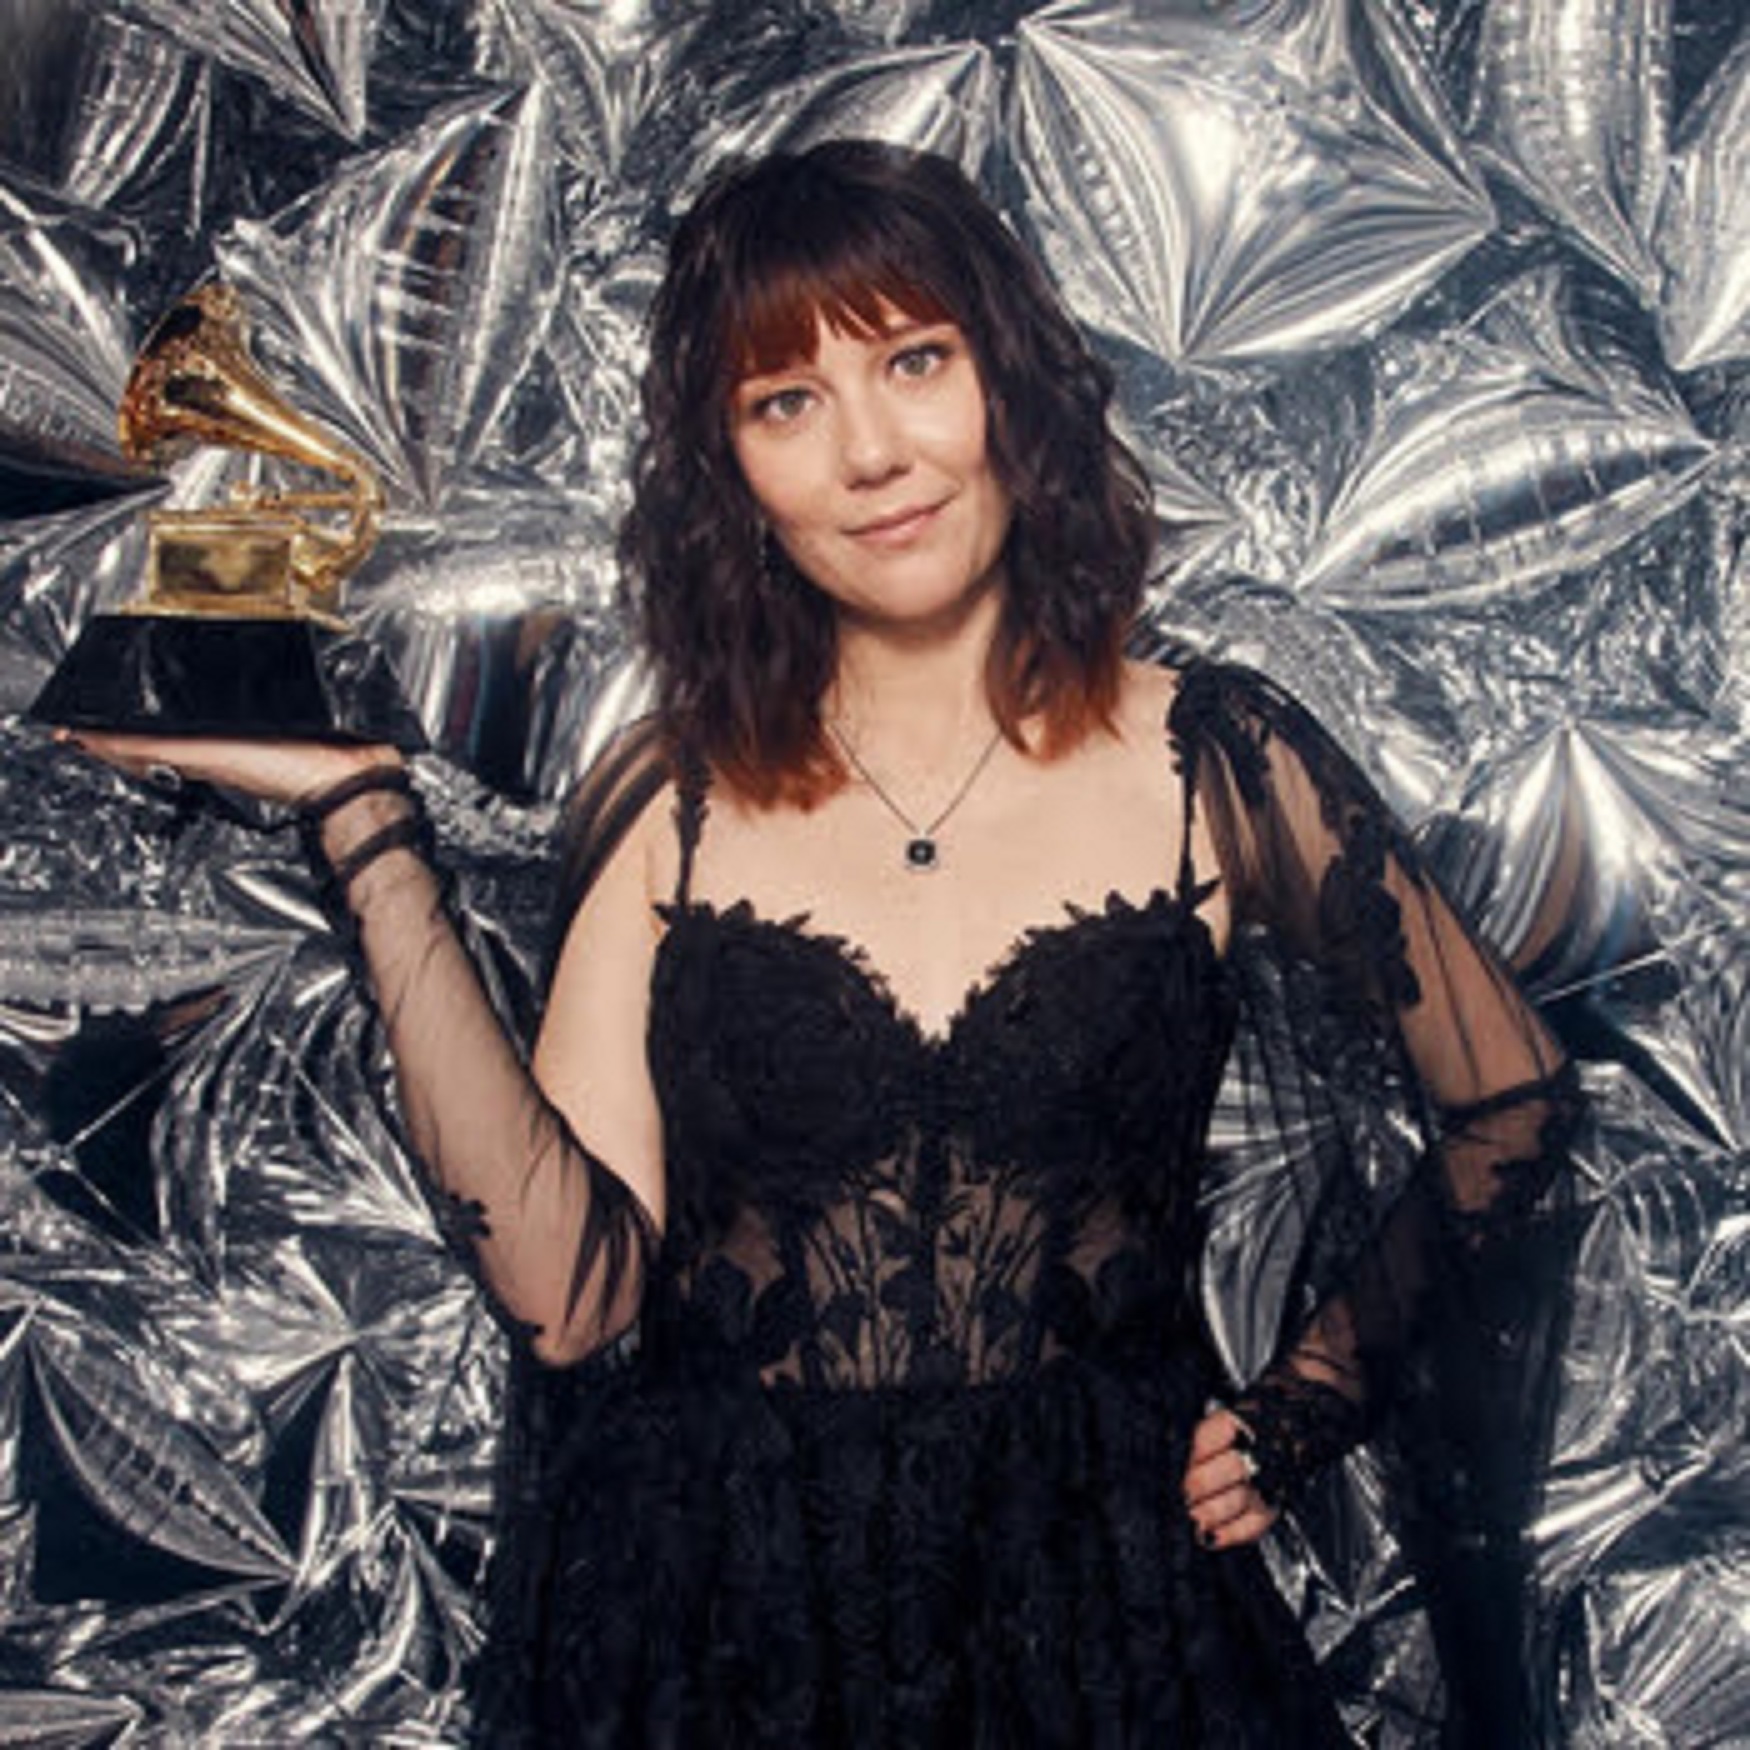 Molly Tuttle wins Best Bluegrass Album at 65th GRAMMY Awards